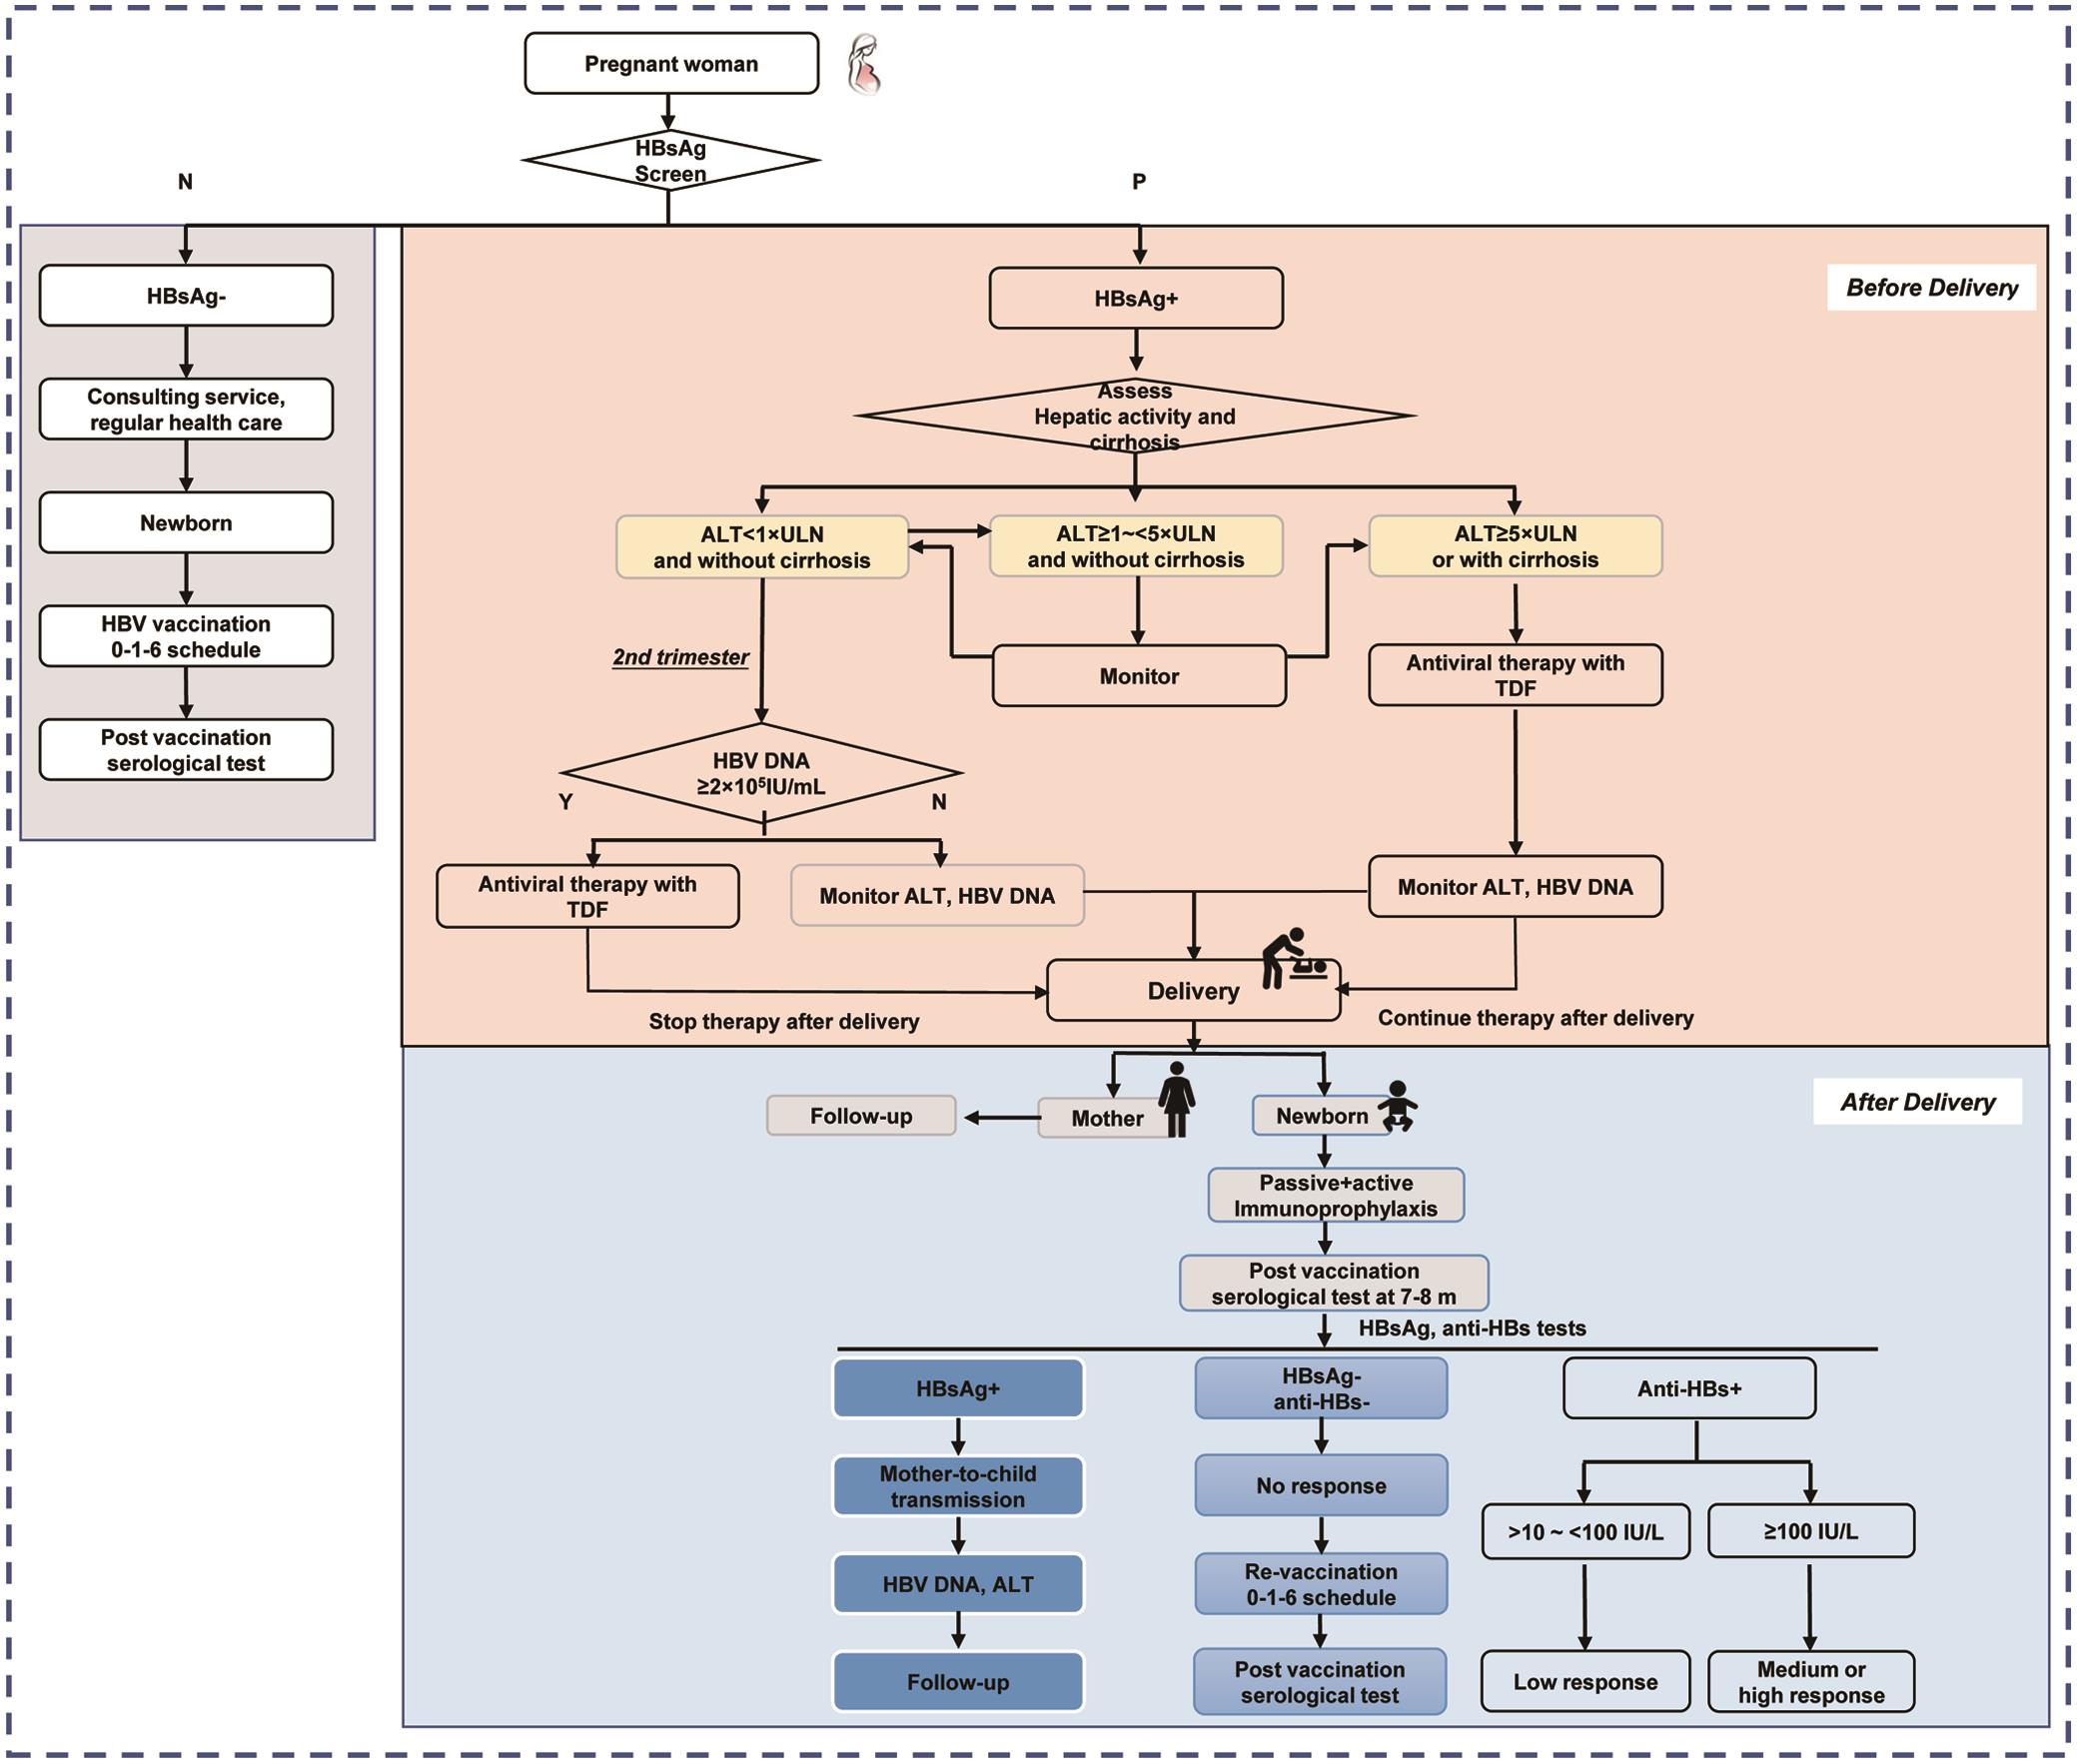 Management algorithm for preventing mother-to-child transmission of hepatitis B virus.